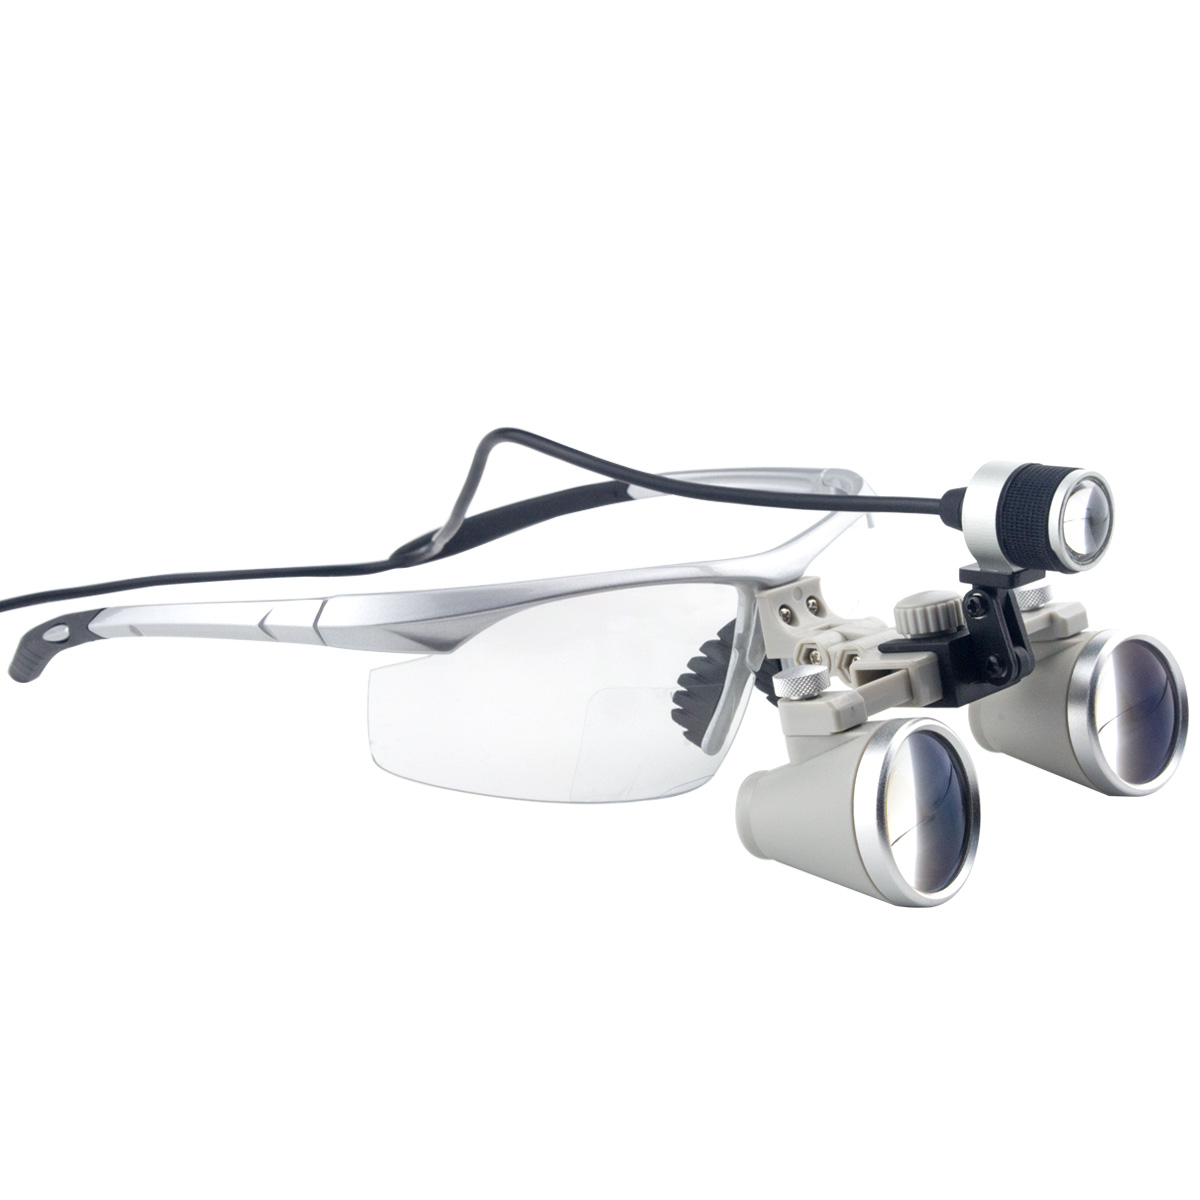 3.5aumentos Profesional Lupas con marco de plata BP Deportes y montado LED de luz de la cabeza de Dental, Quirúrgico, Joyero, o Hobby | Pupila ajustable Distancia Modelo # CH350AXSL